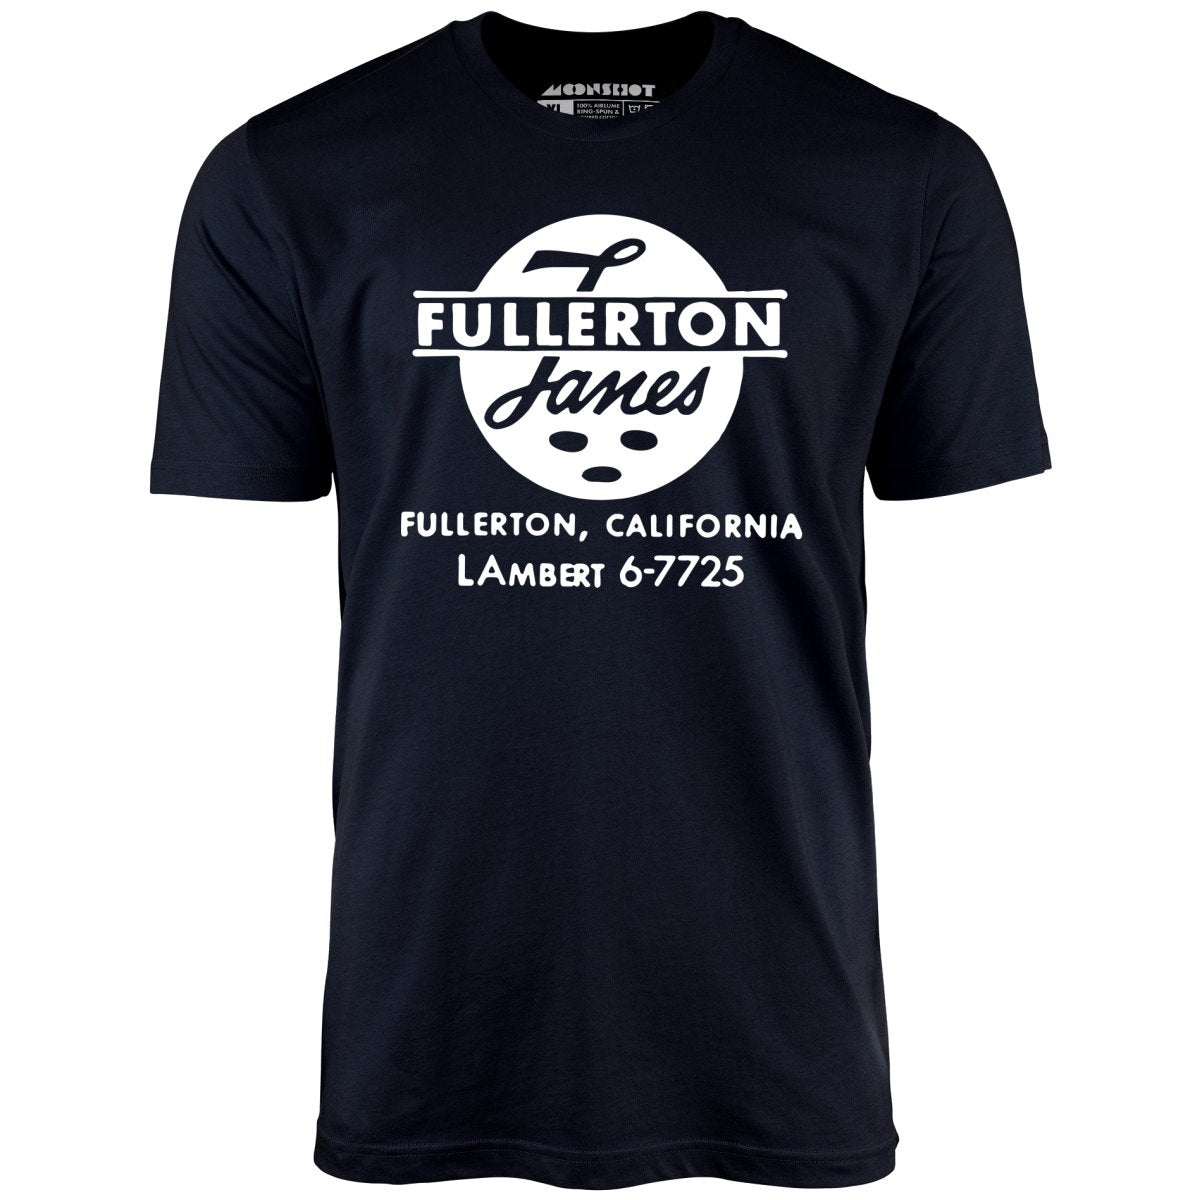 Fullerton Lanes - Fullerton, CA - Vintage Bowling Alley - Unisex T-Shirt